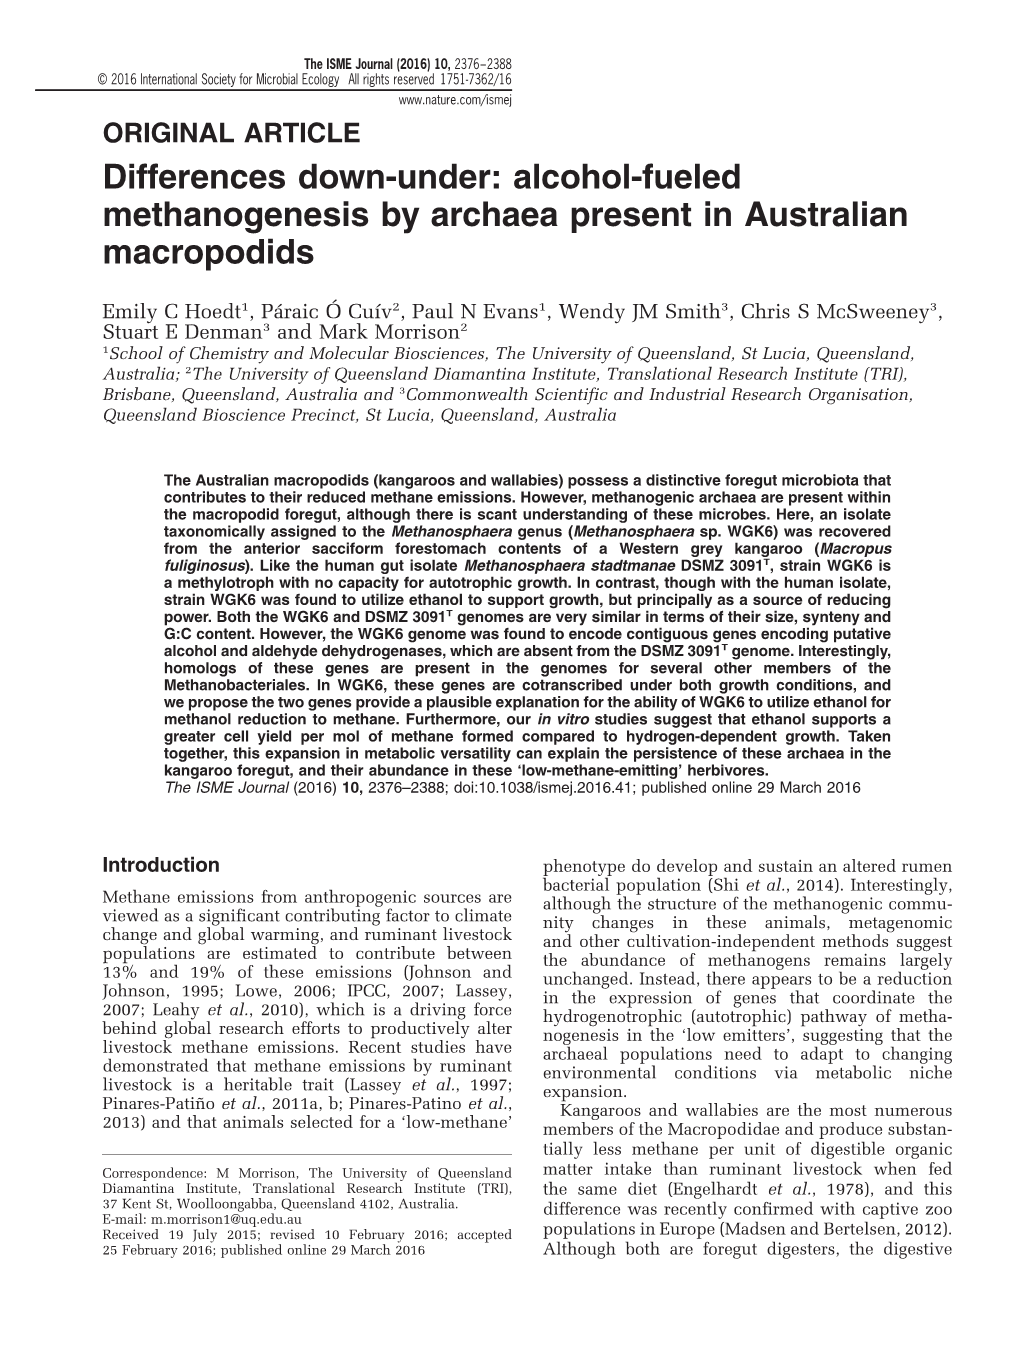 Alcohol-Fueled Methanogenesis by Archaea Present in Australian Macropodids